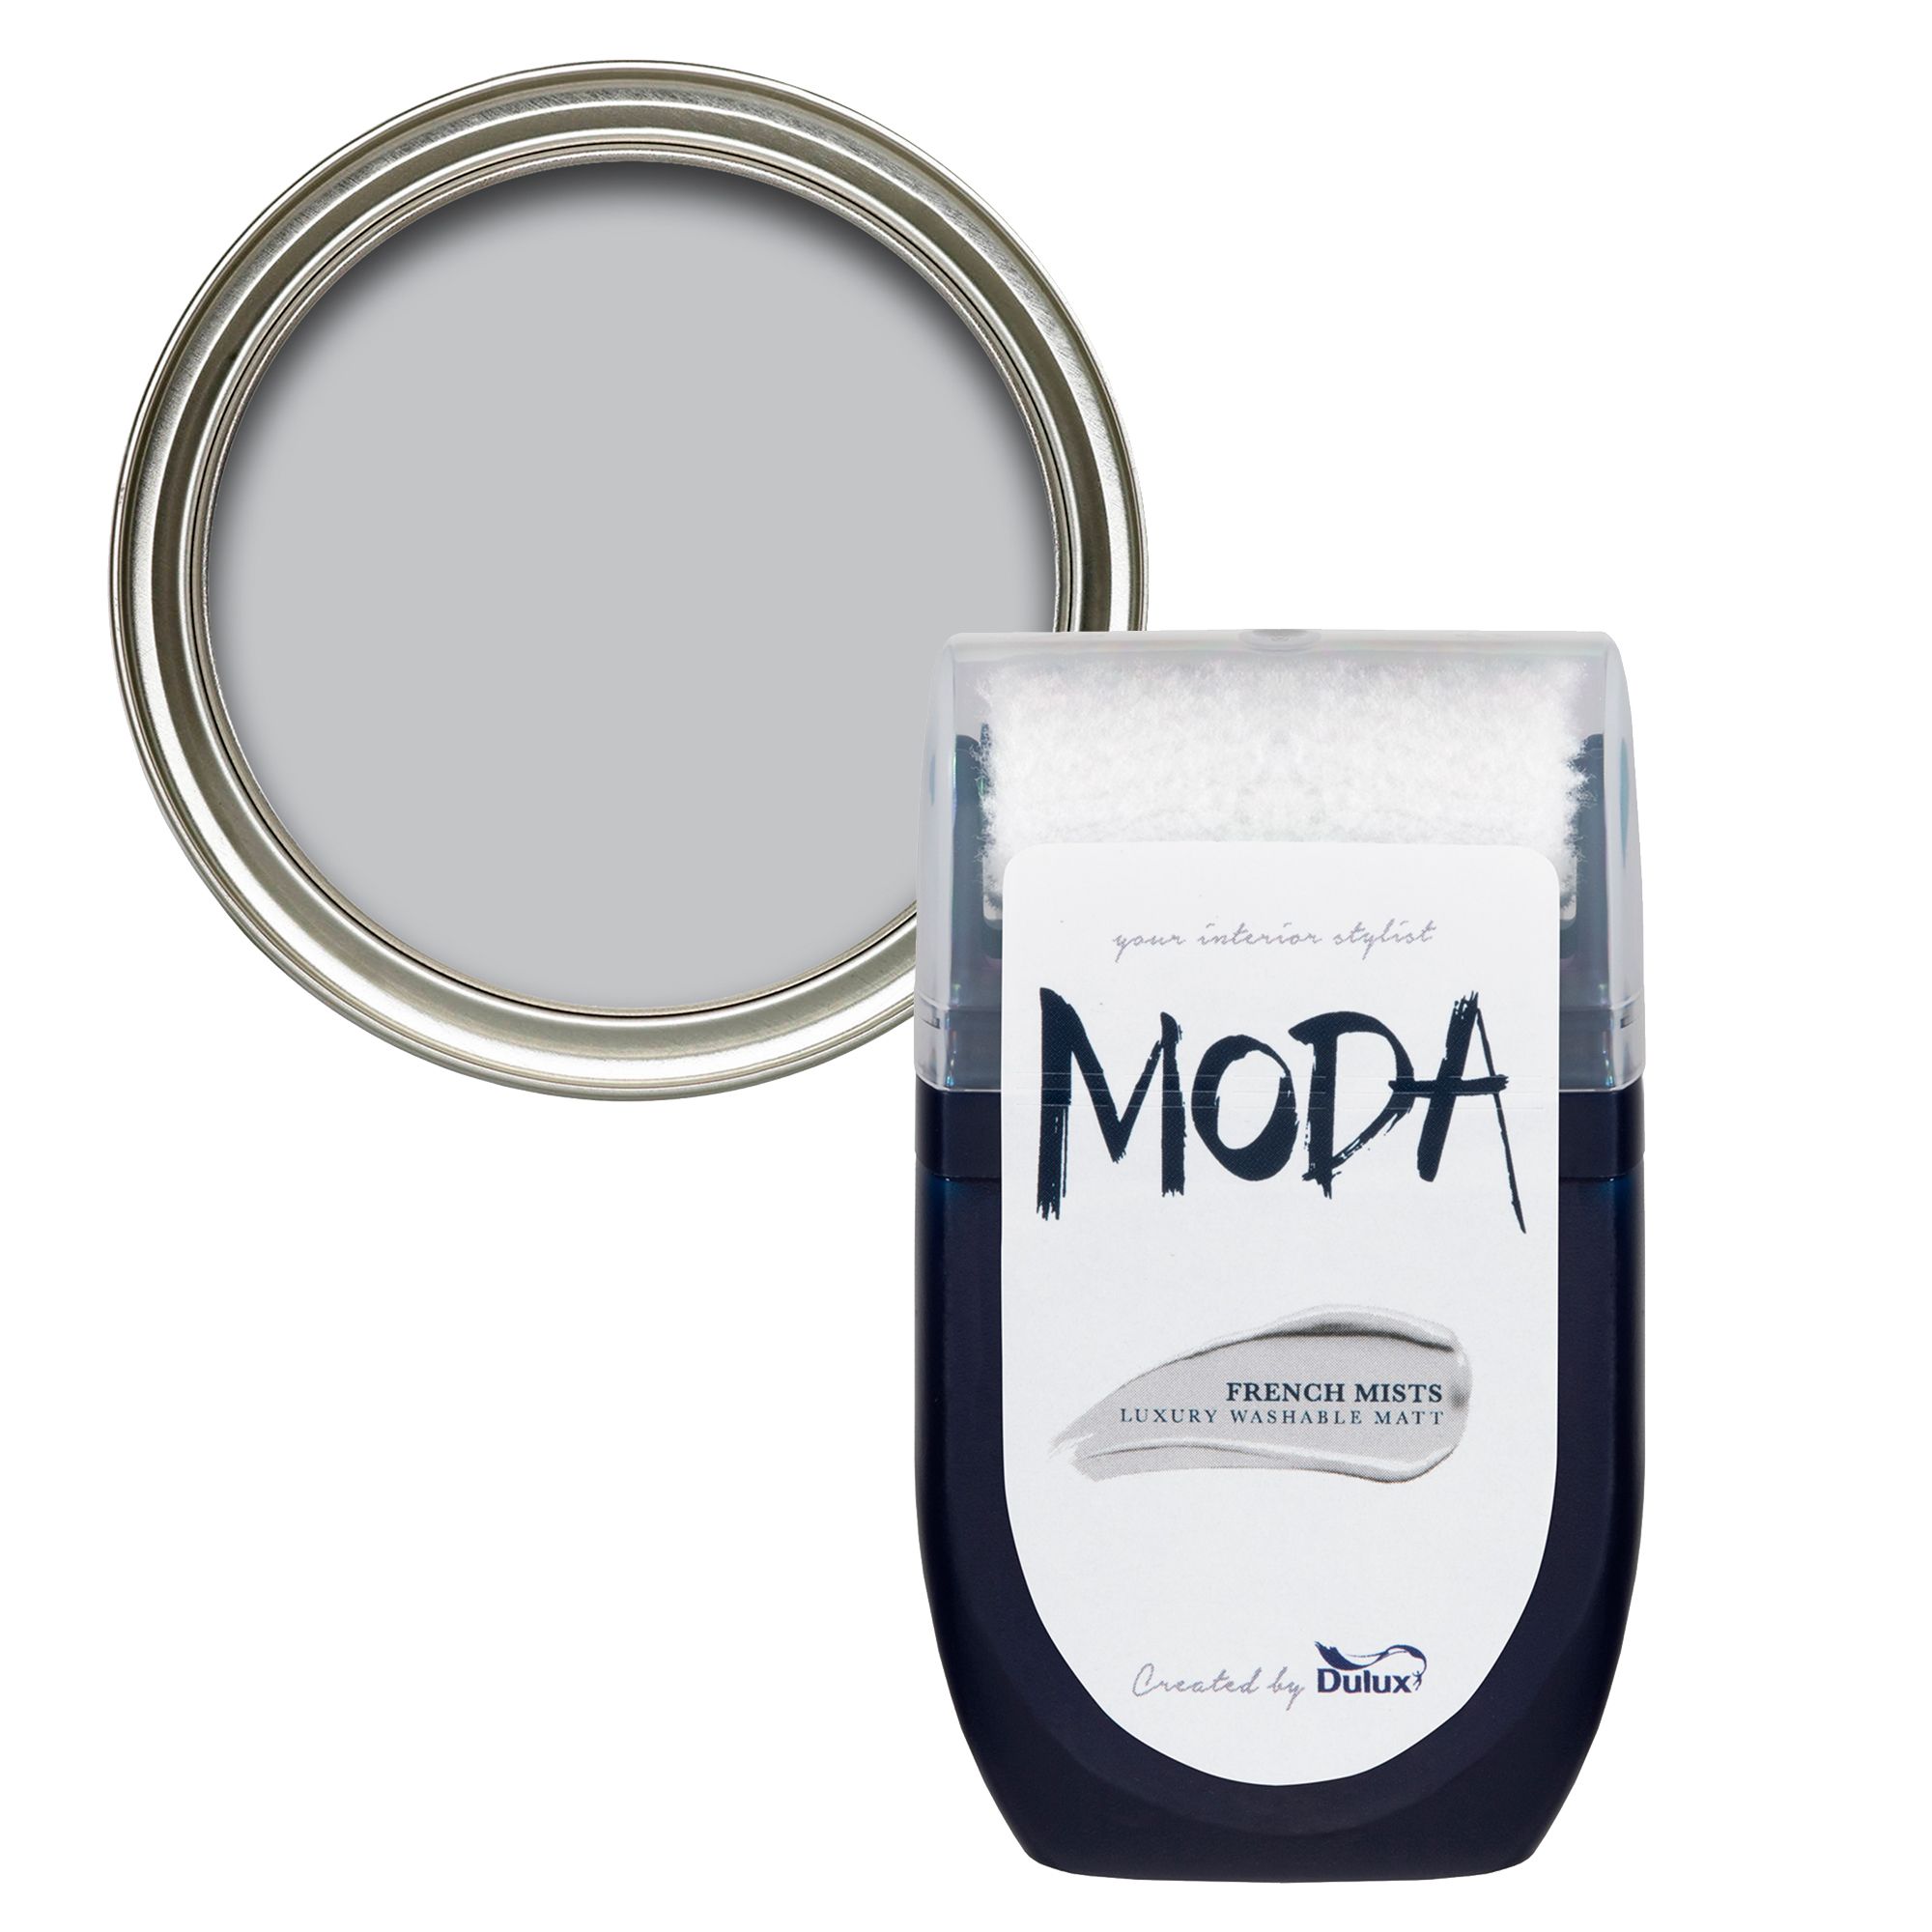 Dulux Moda French mists Flat matt Emulsion paint, 30ml